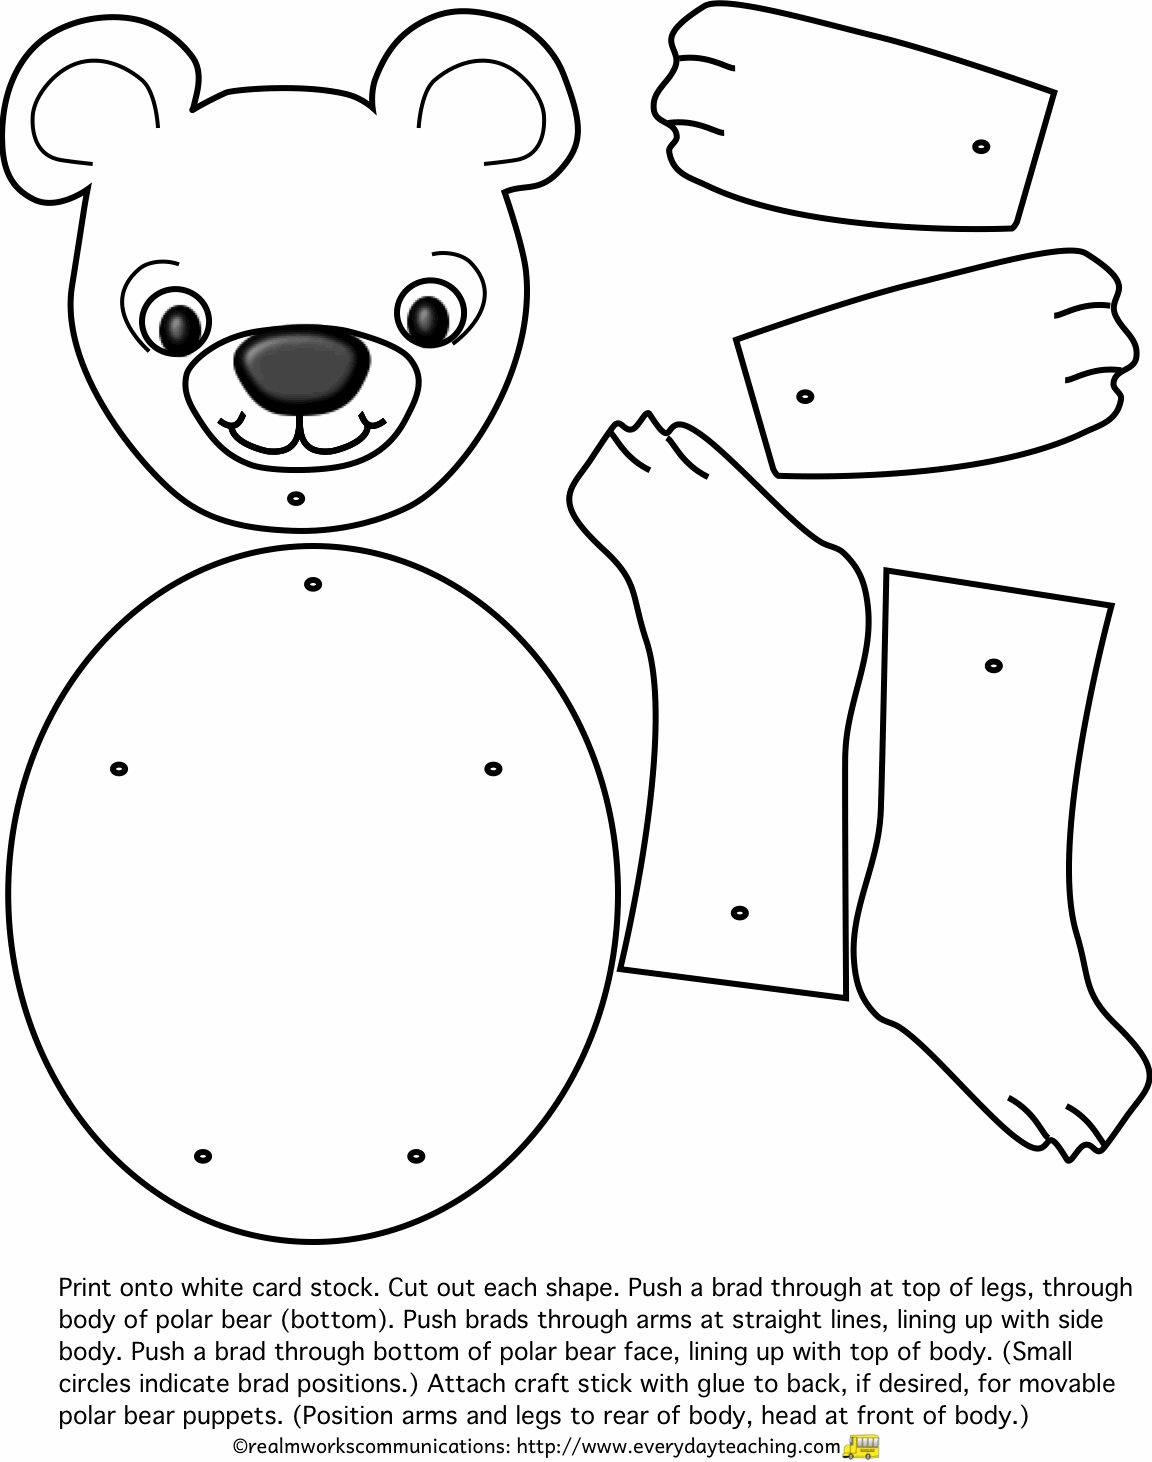 patties-classroom-brown-bear-brown-bear-teddy-bear-picnic